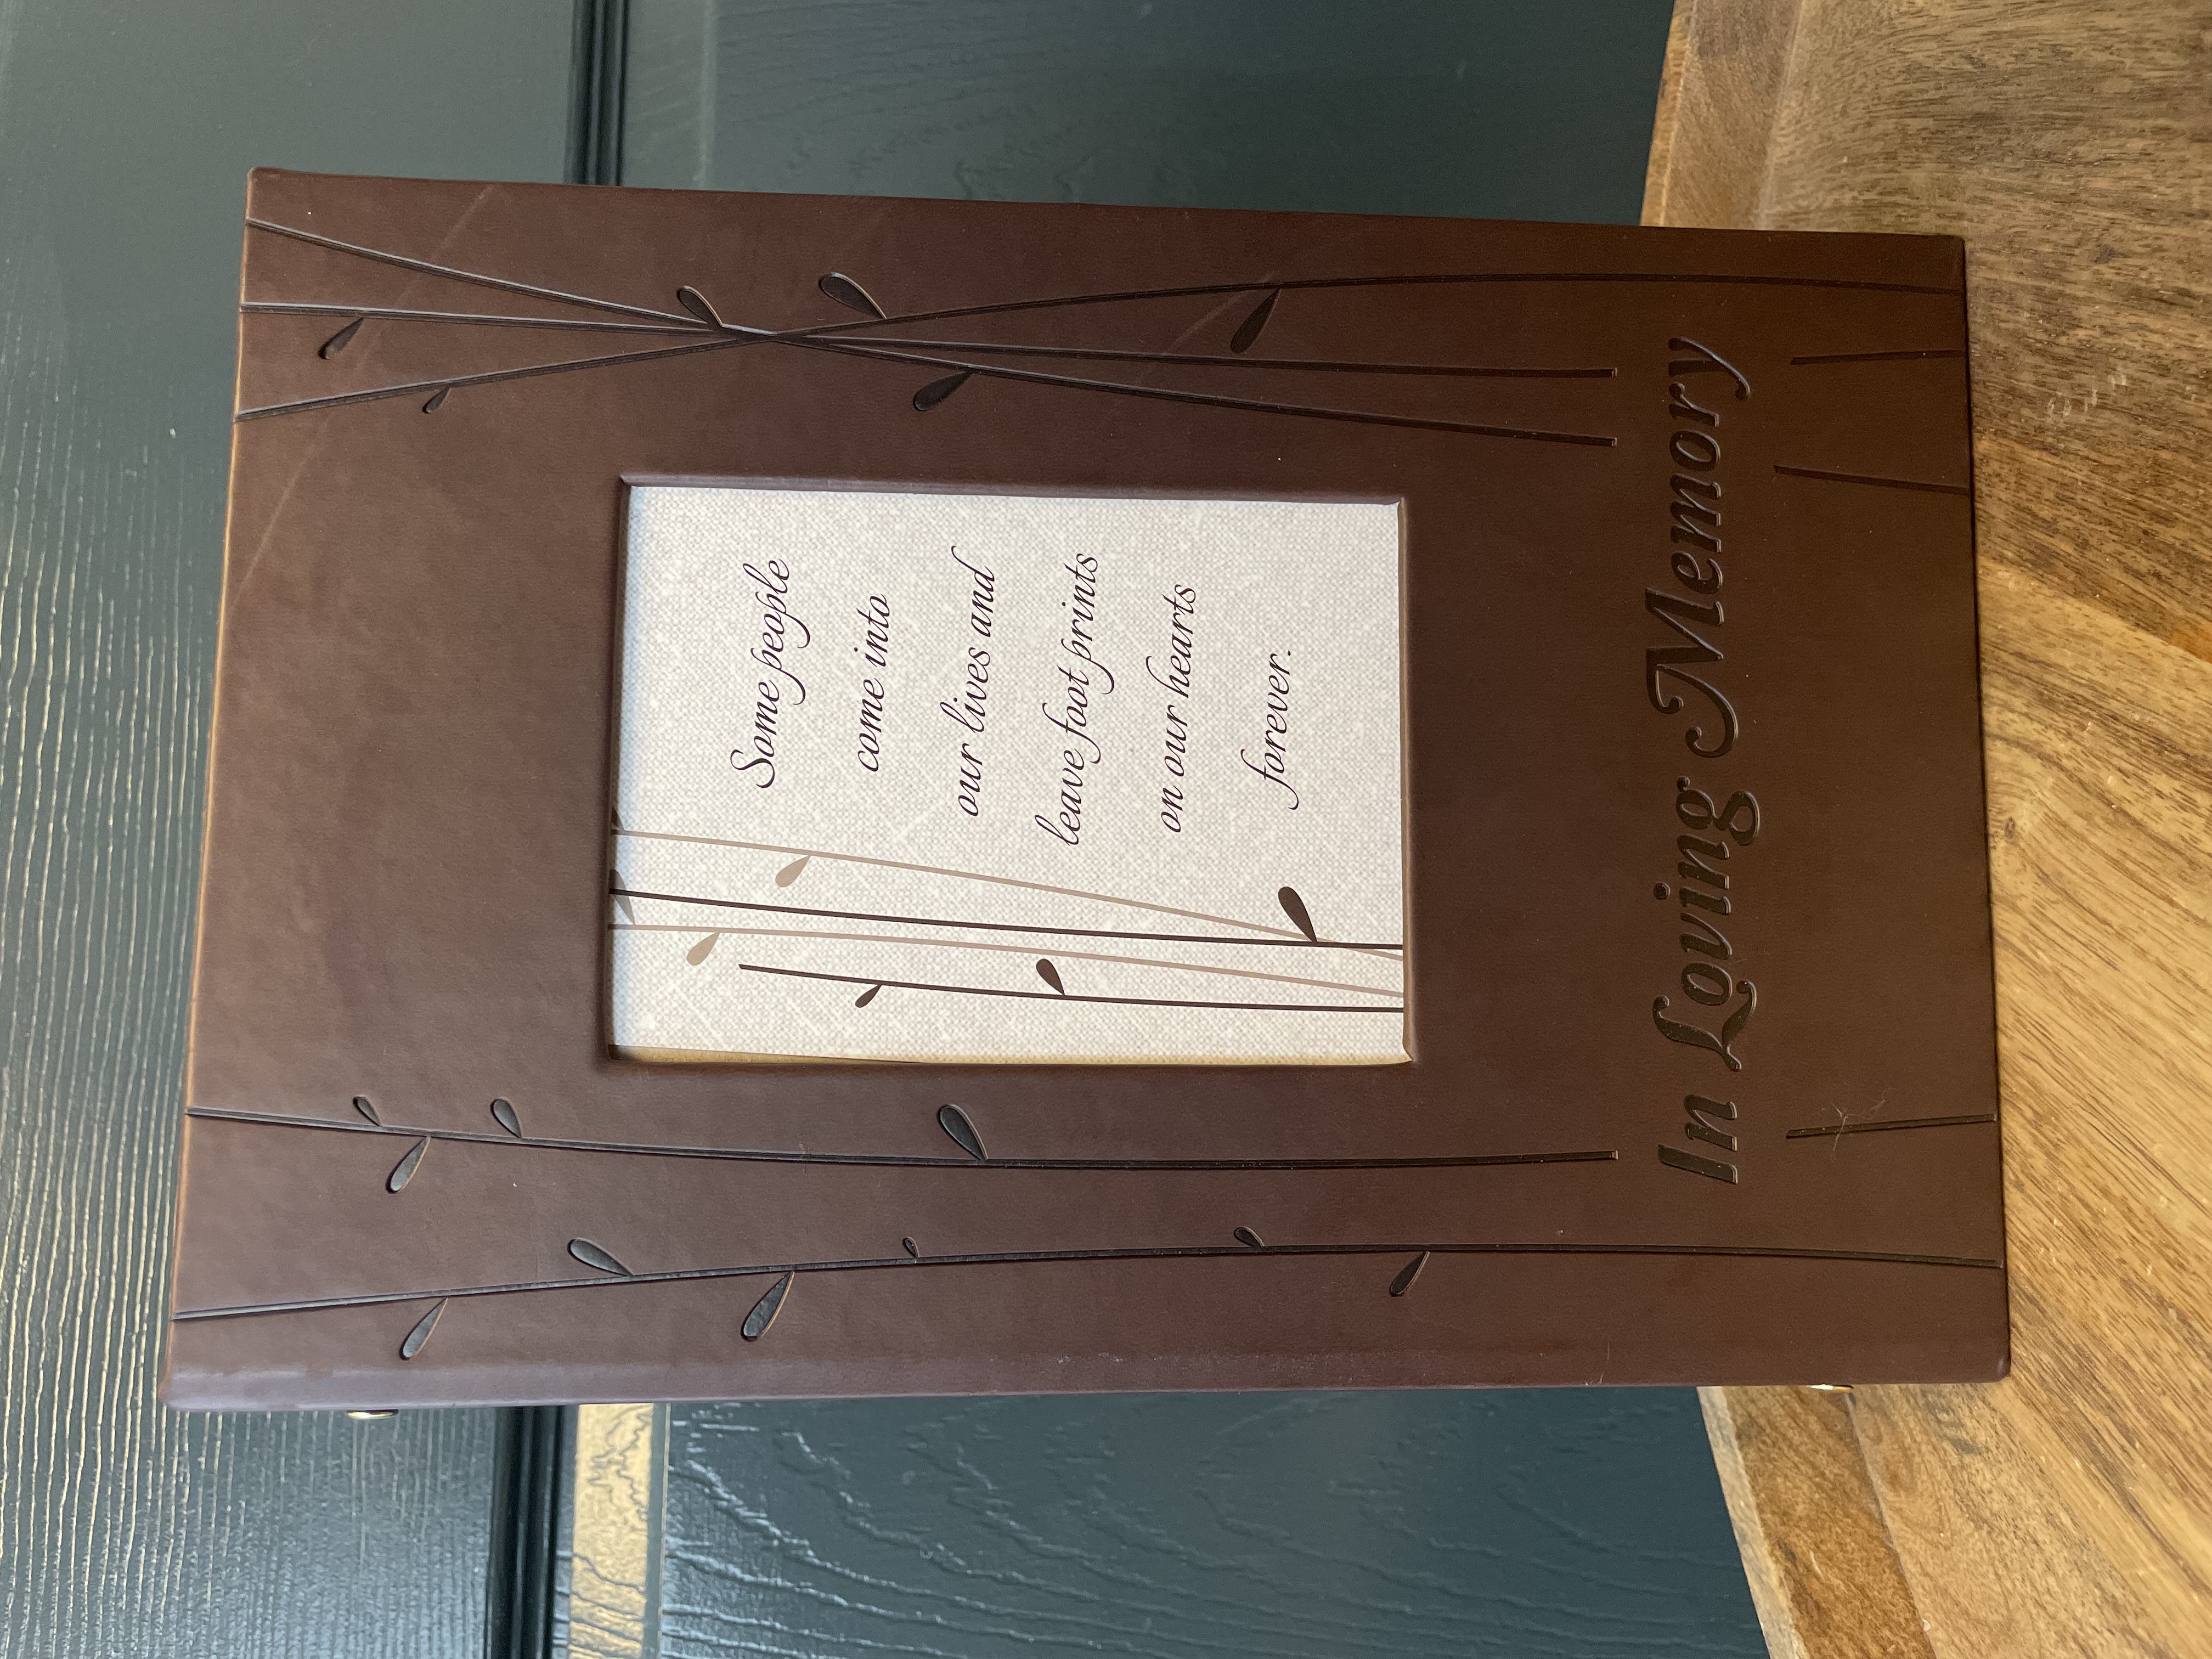 Register Book - Chocolate Brown